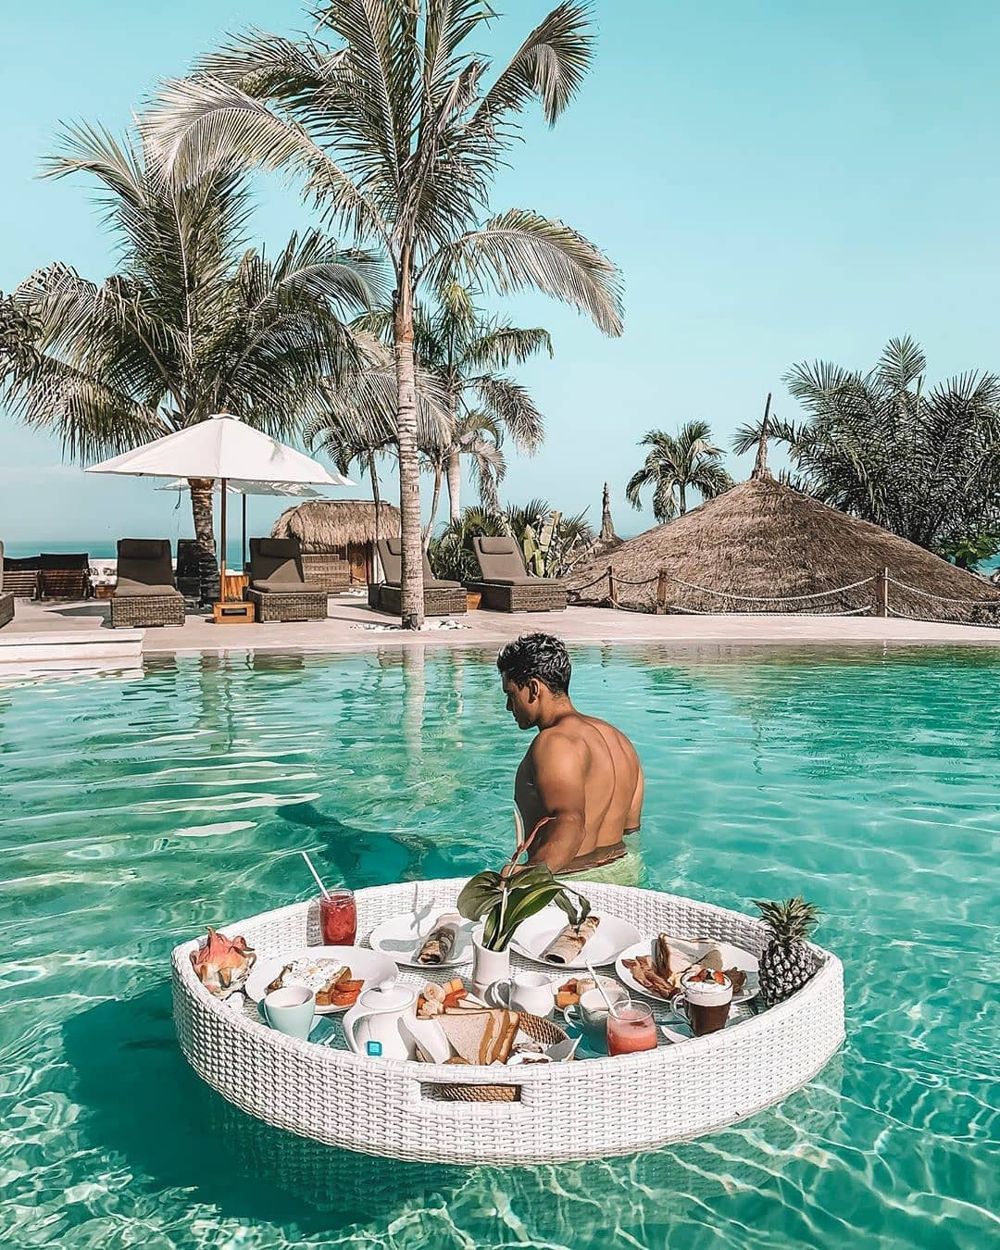 Romantic Bali Hotels - La Joya Balangan Resort - floating breakfast